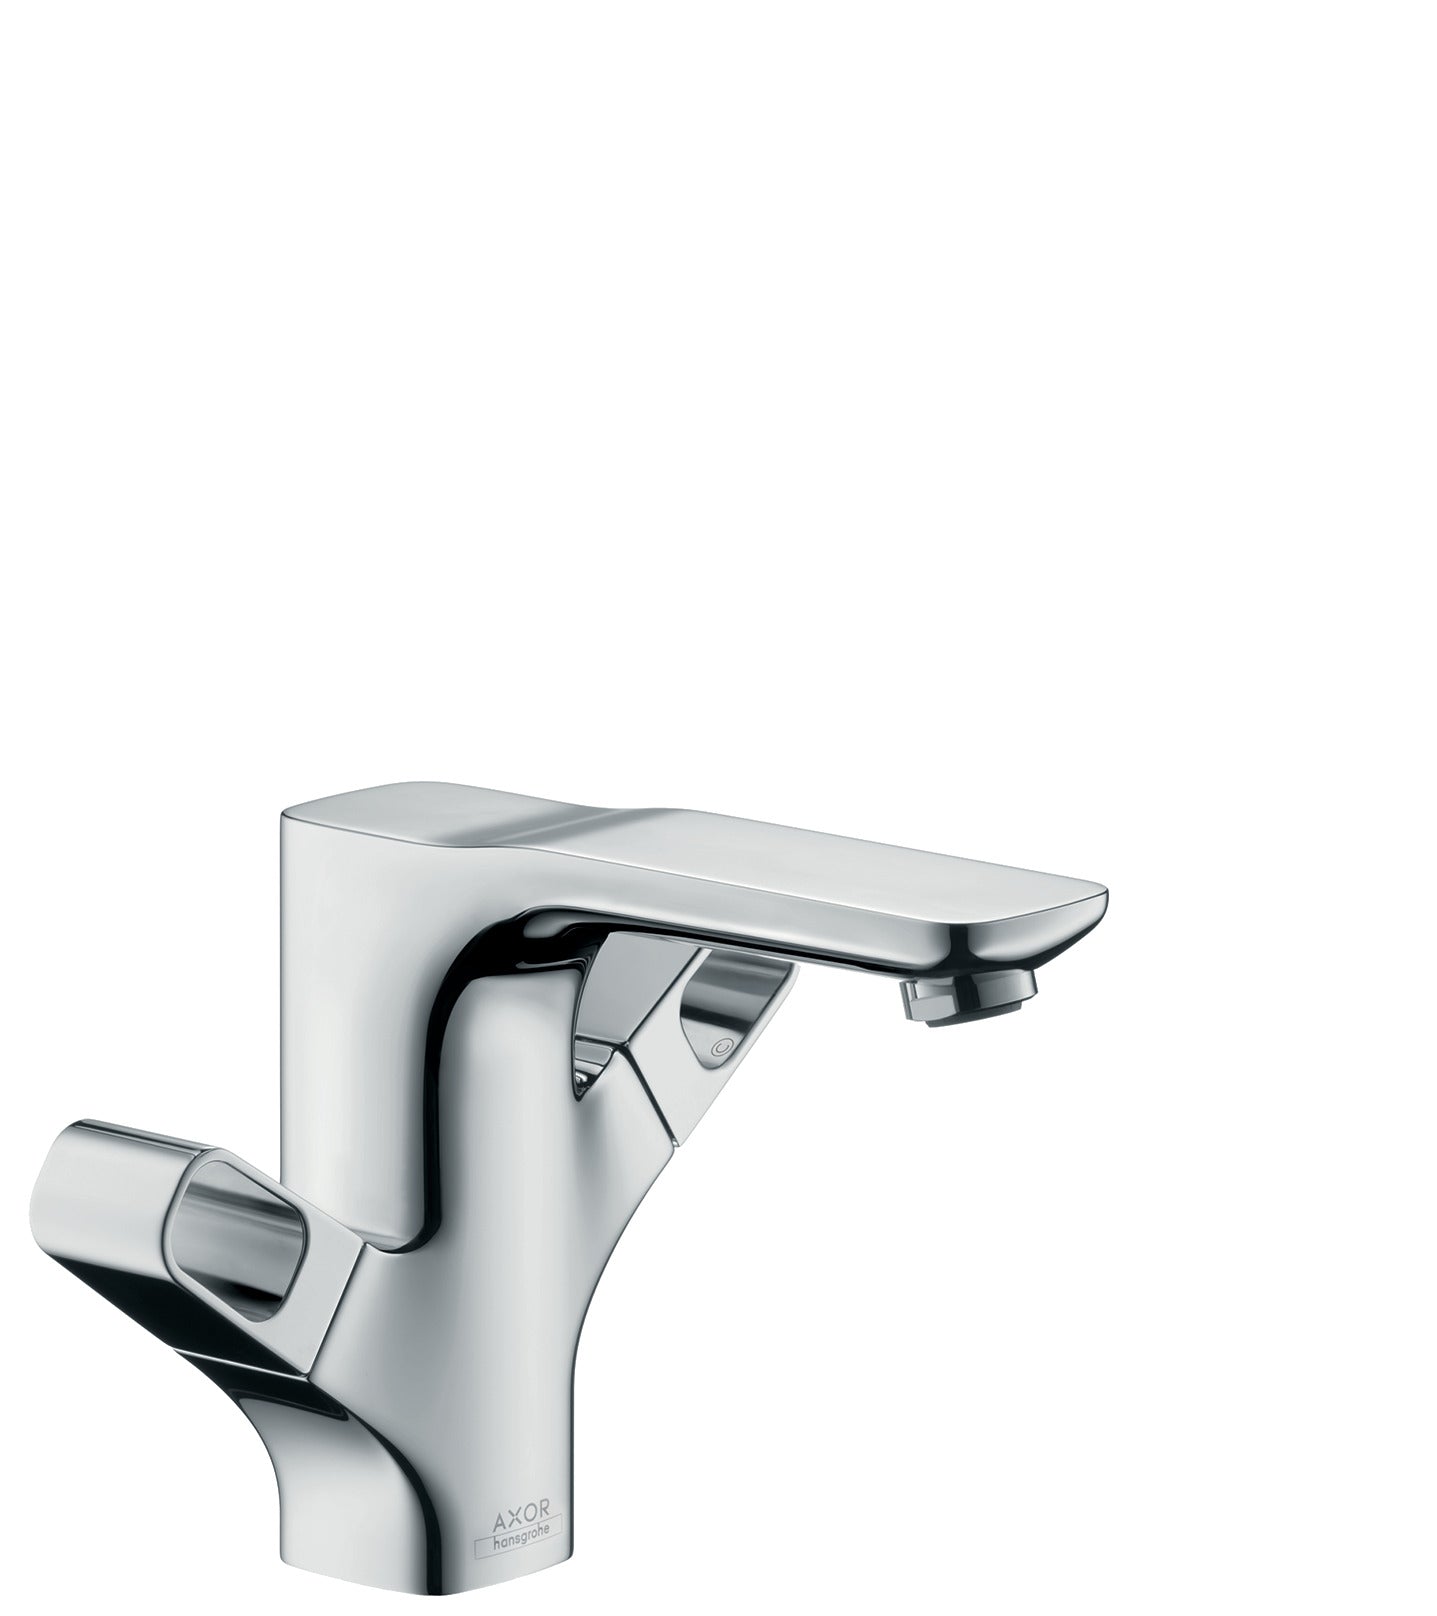 AXOR 11024001 Chrome Urquiola Modern Lavatory Faucet 1.2 GPM